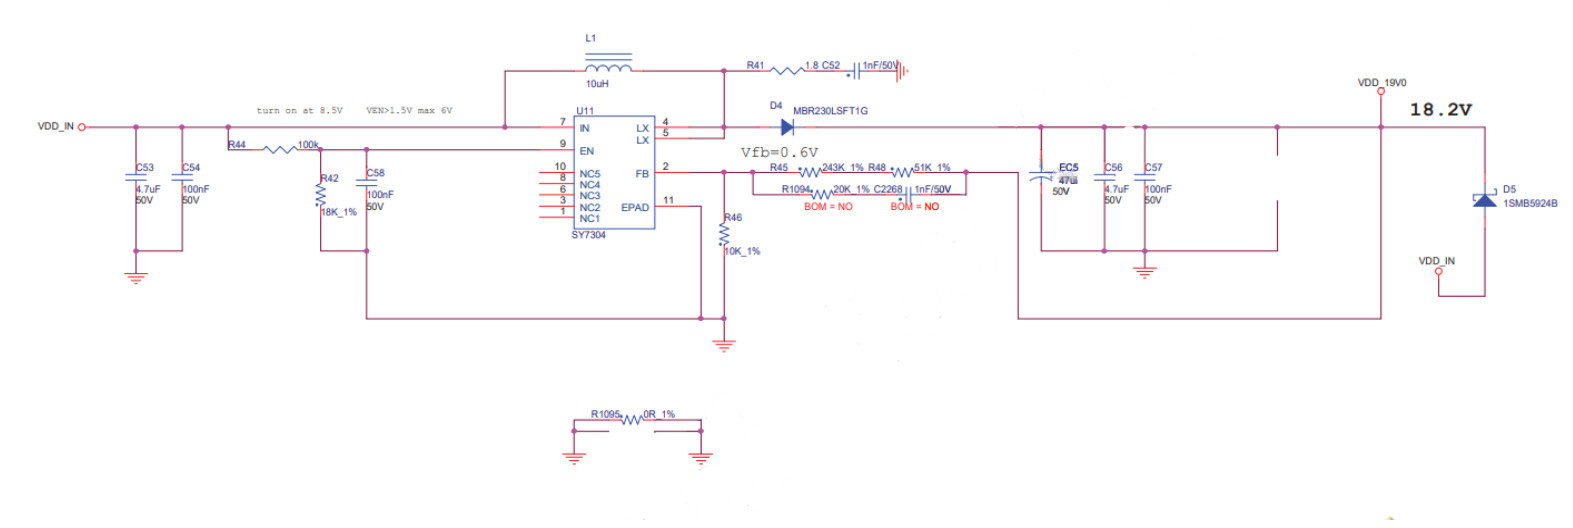 S19 xp boost circuit schematic